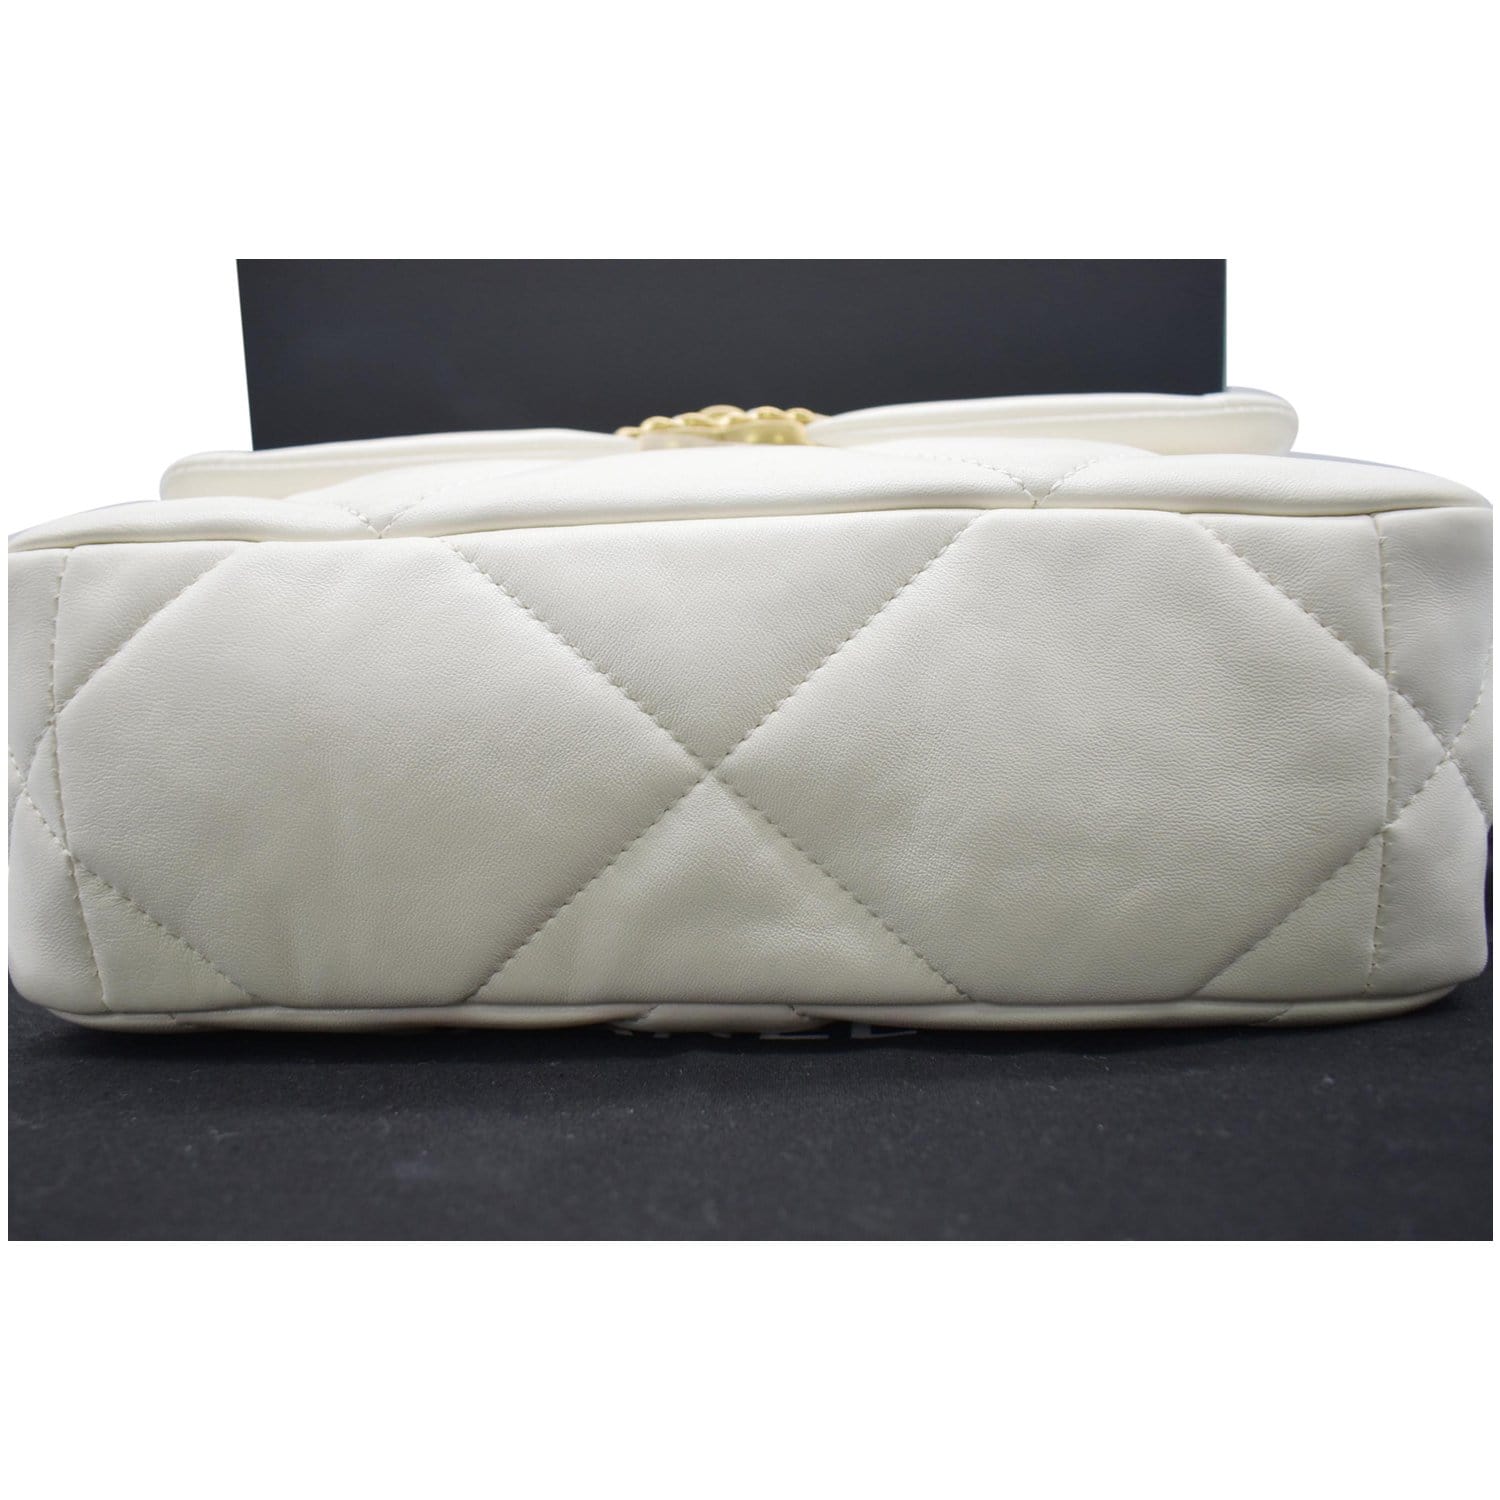 chanel small white handbag leather